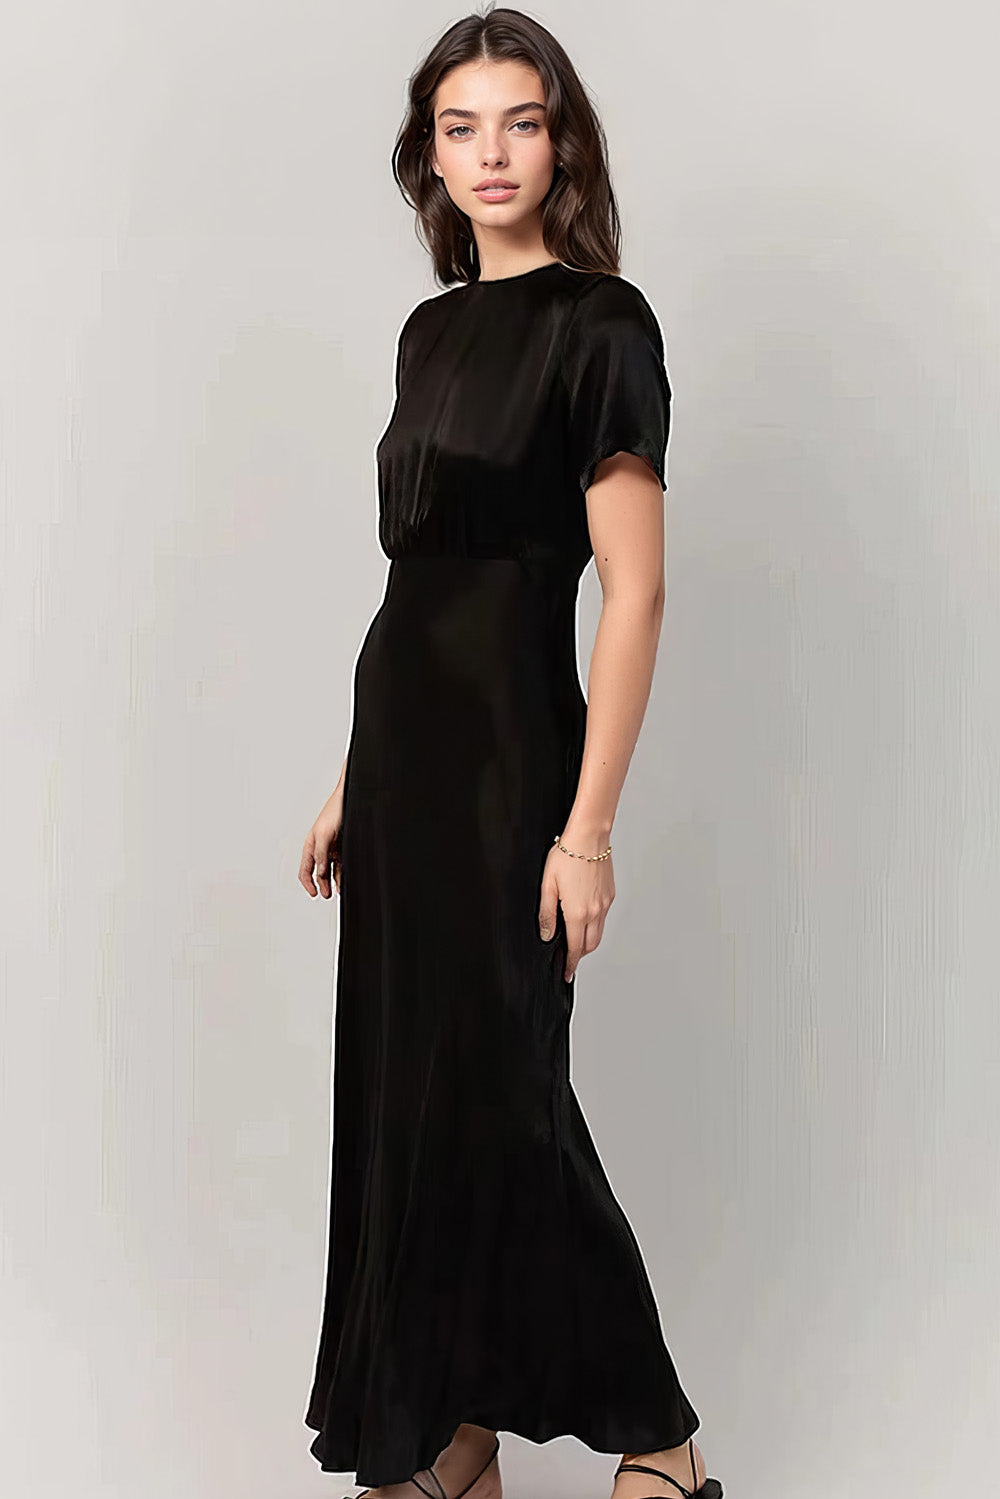 Satin Maxi Dress with Short Sleeves - Black